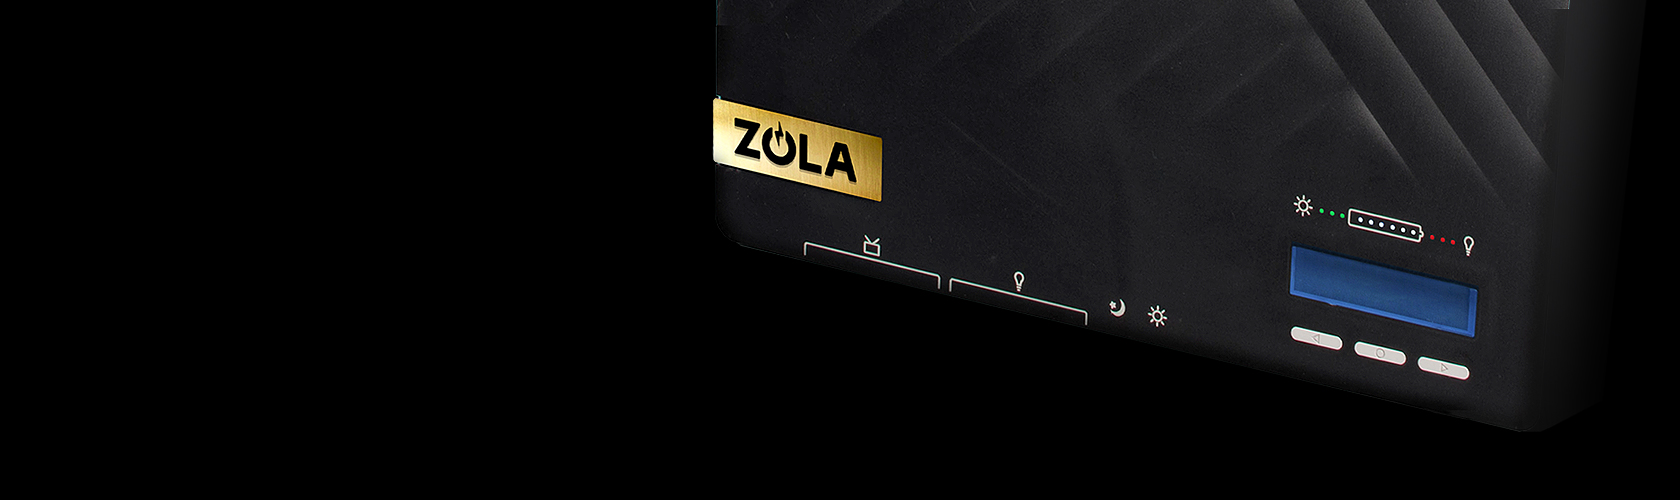 ZOLA Electric